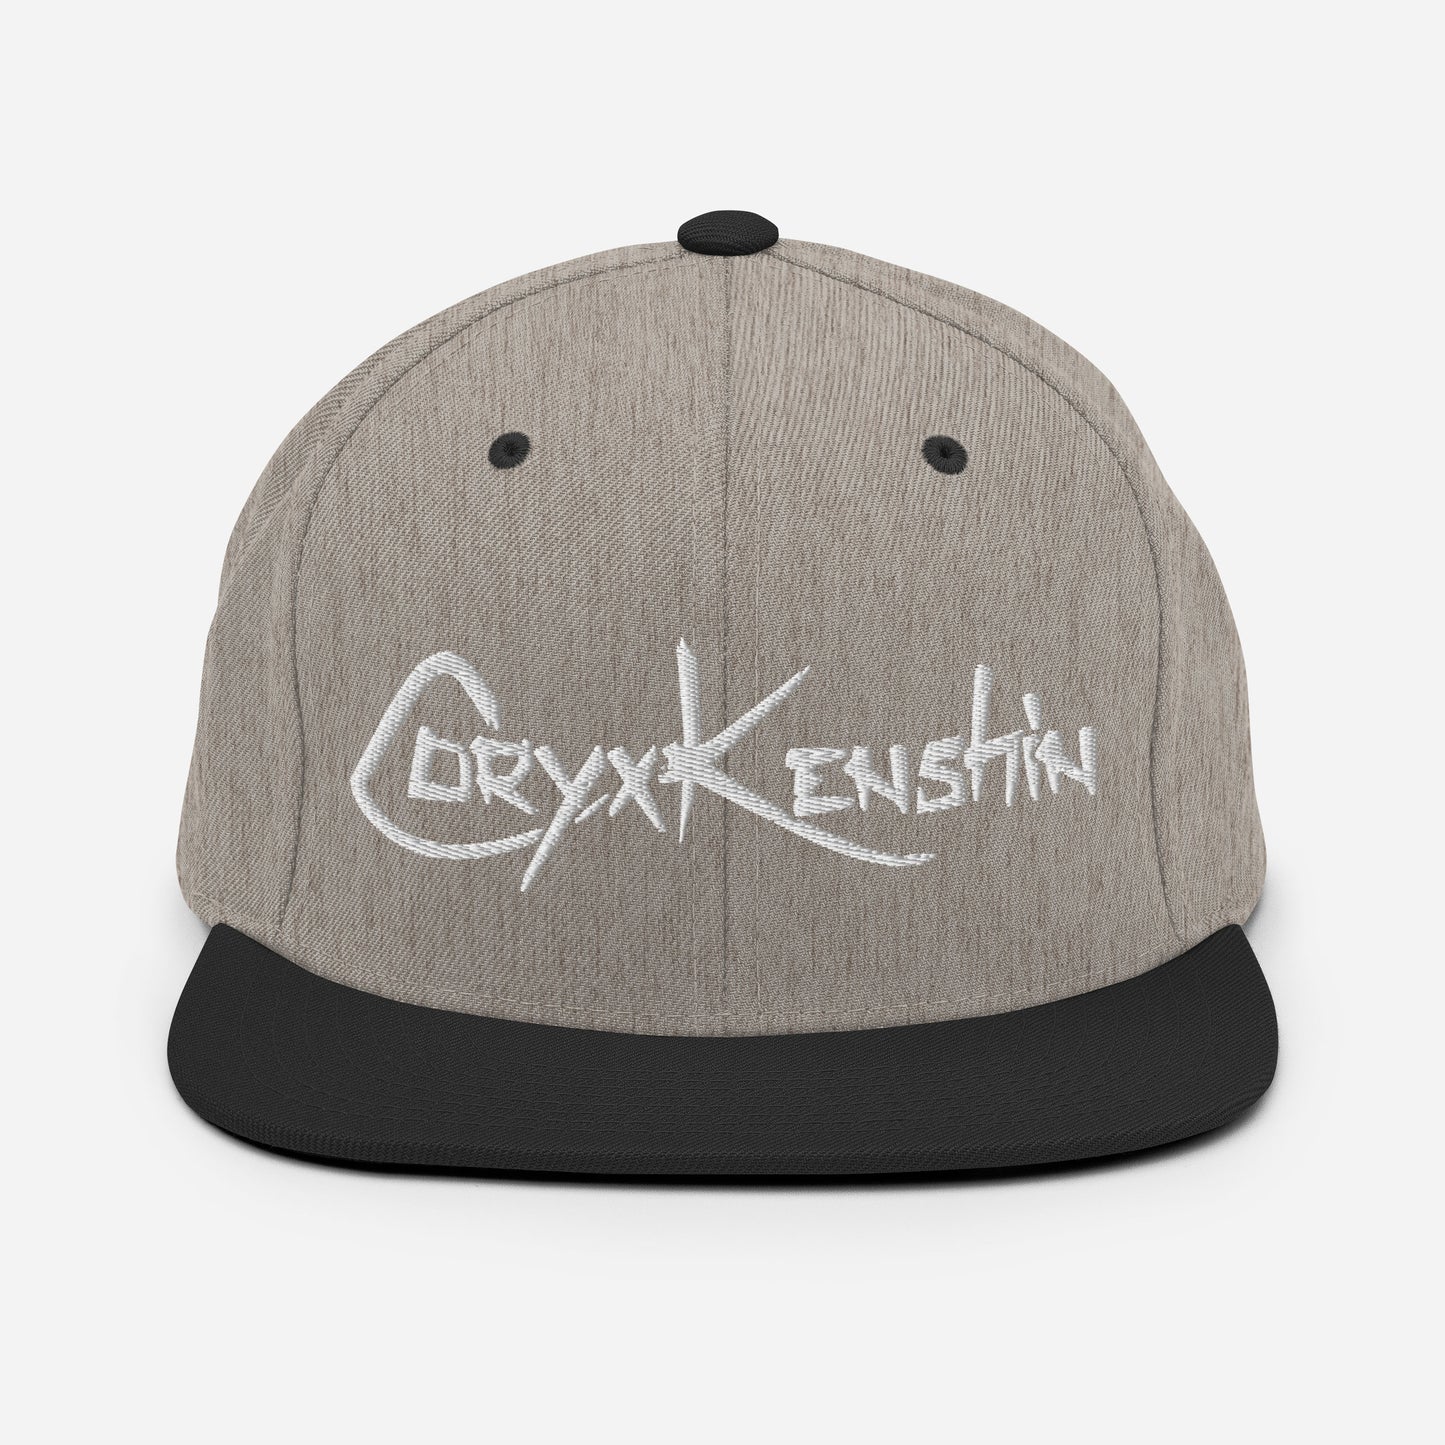 Coryxkenshin Snapback Hat